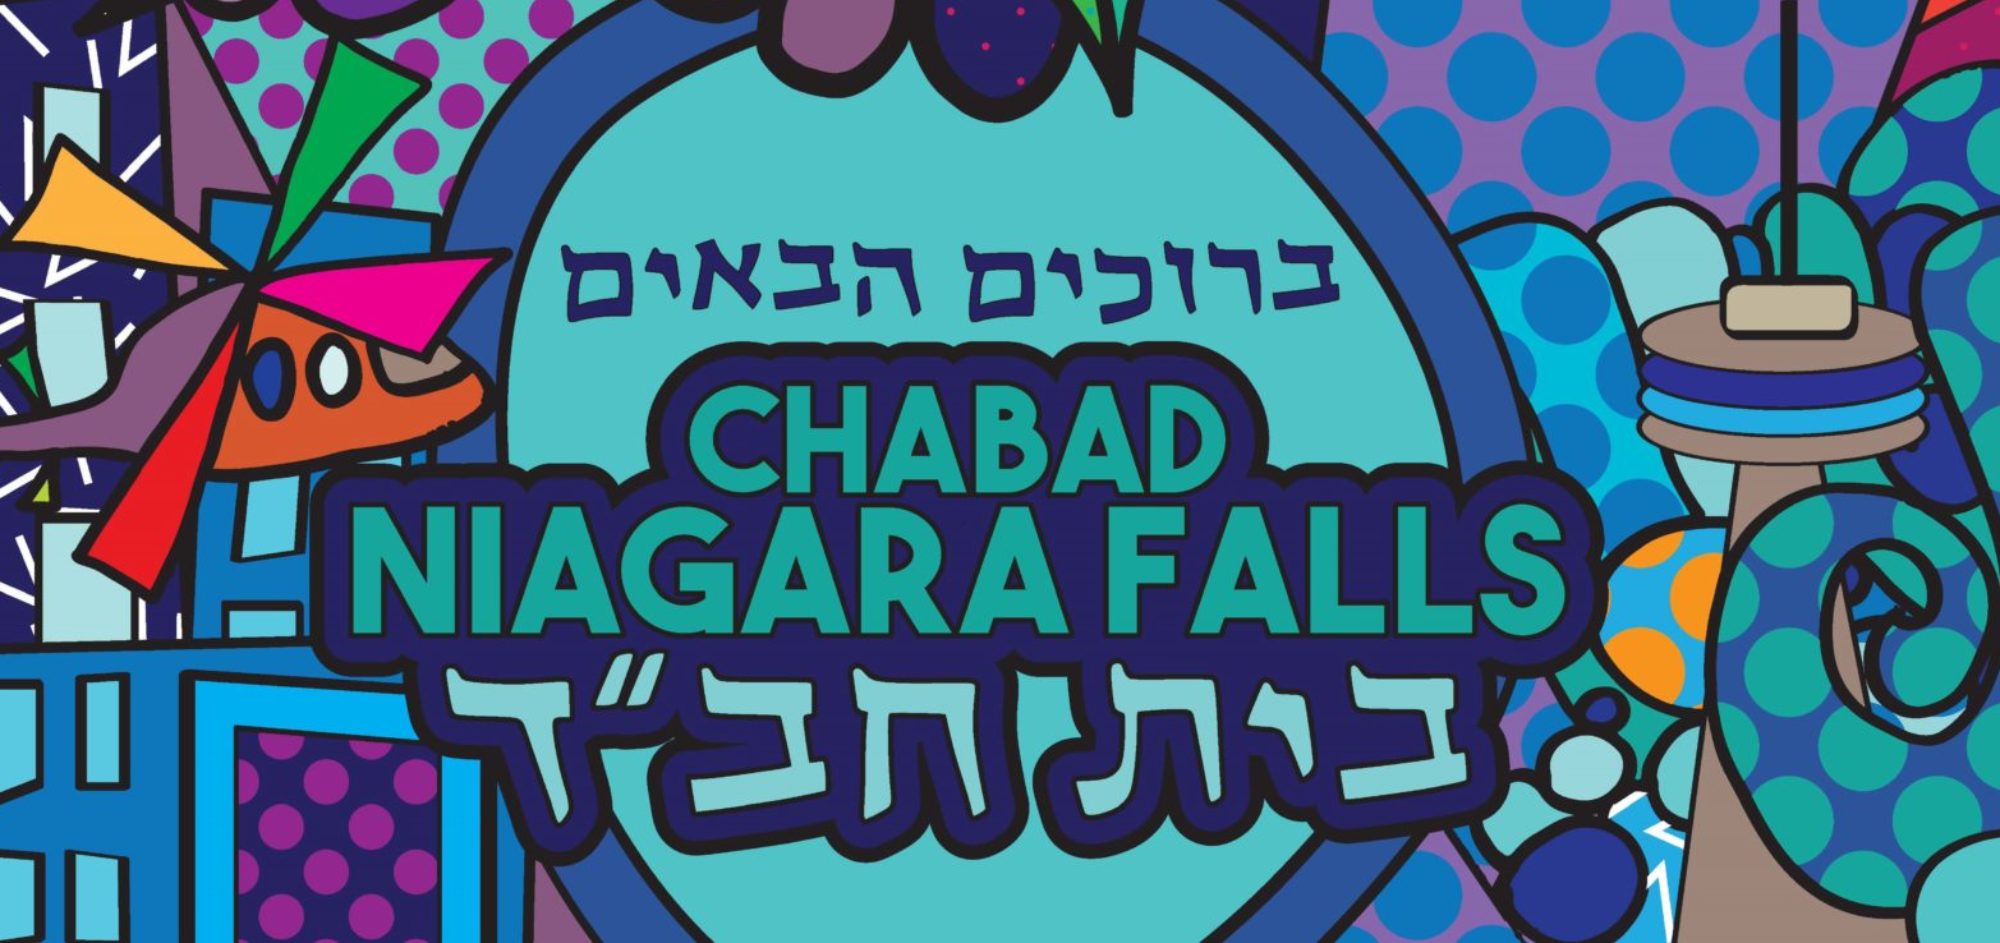 Chabad Niagara